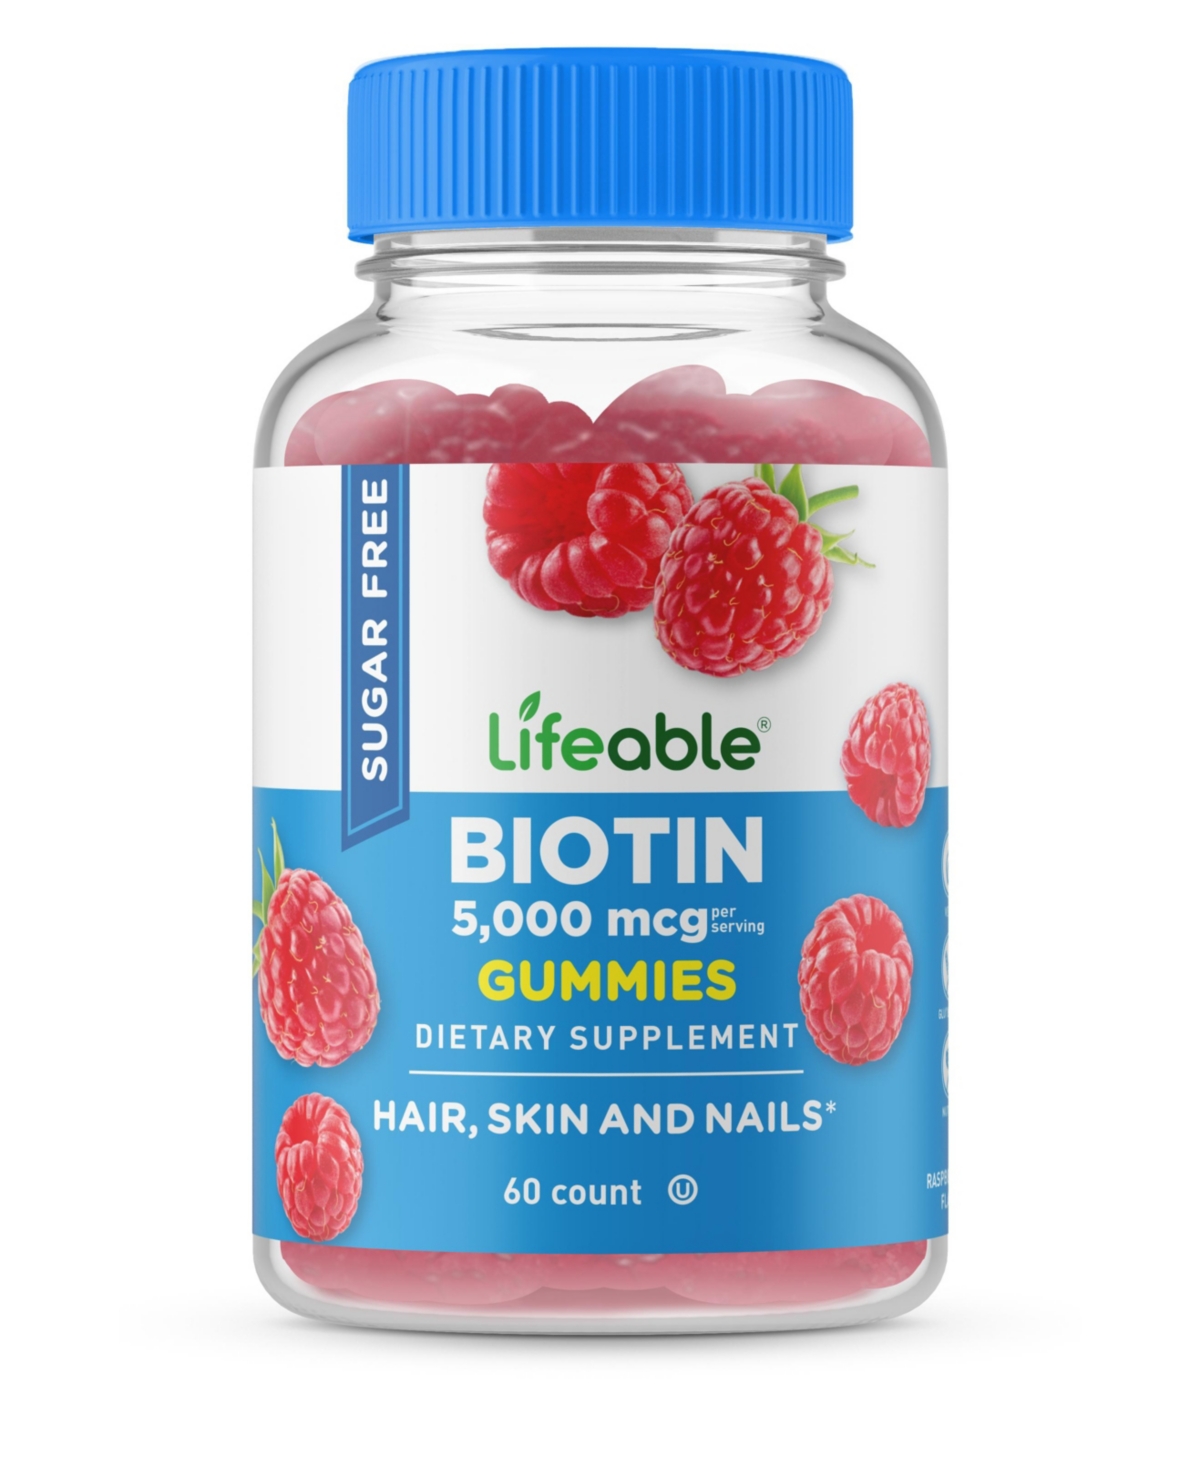 Sugar Free Biotin 5,000 mcg Gummies - Hair, Skin And Nails - Great Tasting Natural Flavor, Dietary Supplement Vitamins - 60 Gummies - Open Mi